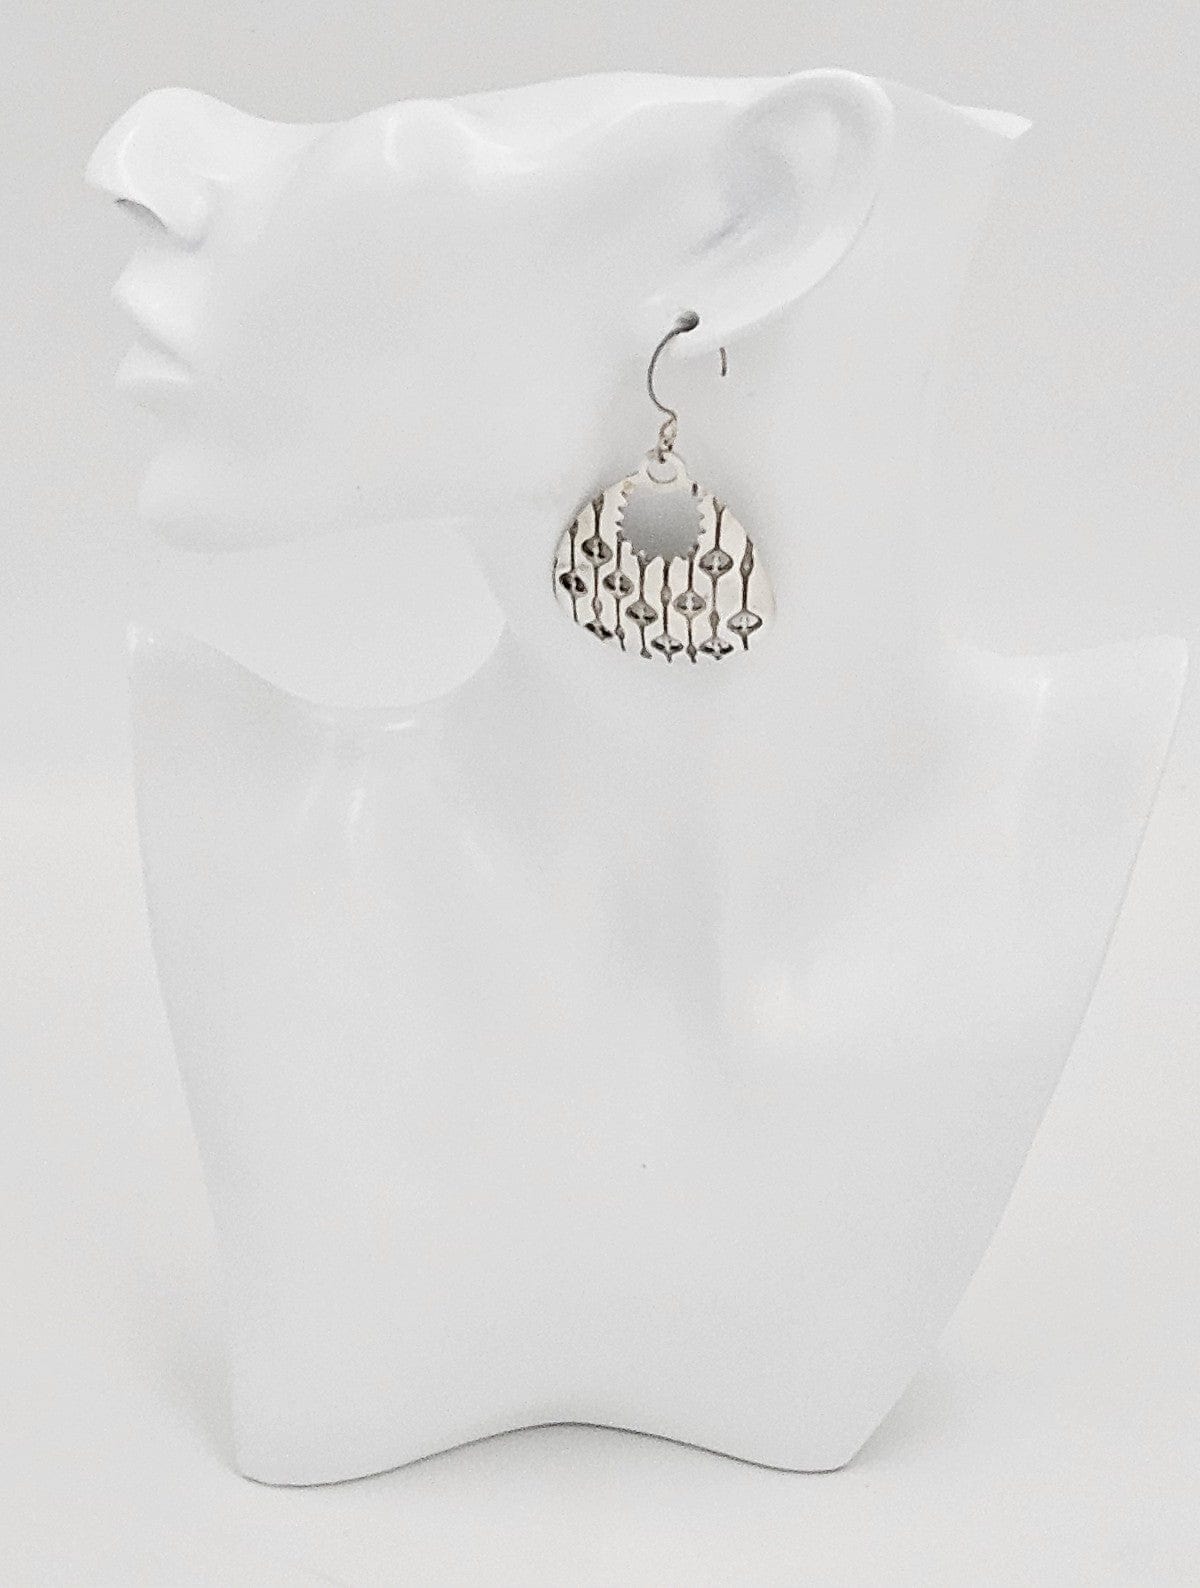 Lisa Jenks Jewelry Superb Artisan Lisa Jenks Sterling Silver Modernist Dangle Hoop Earrings